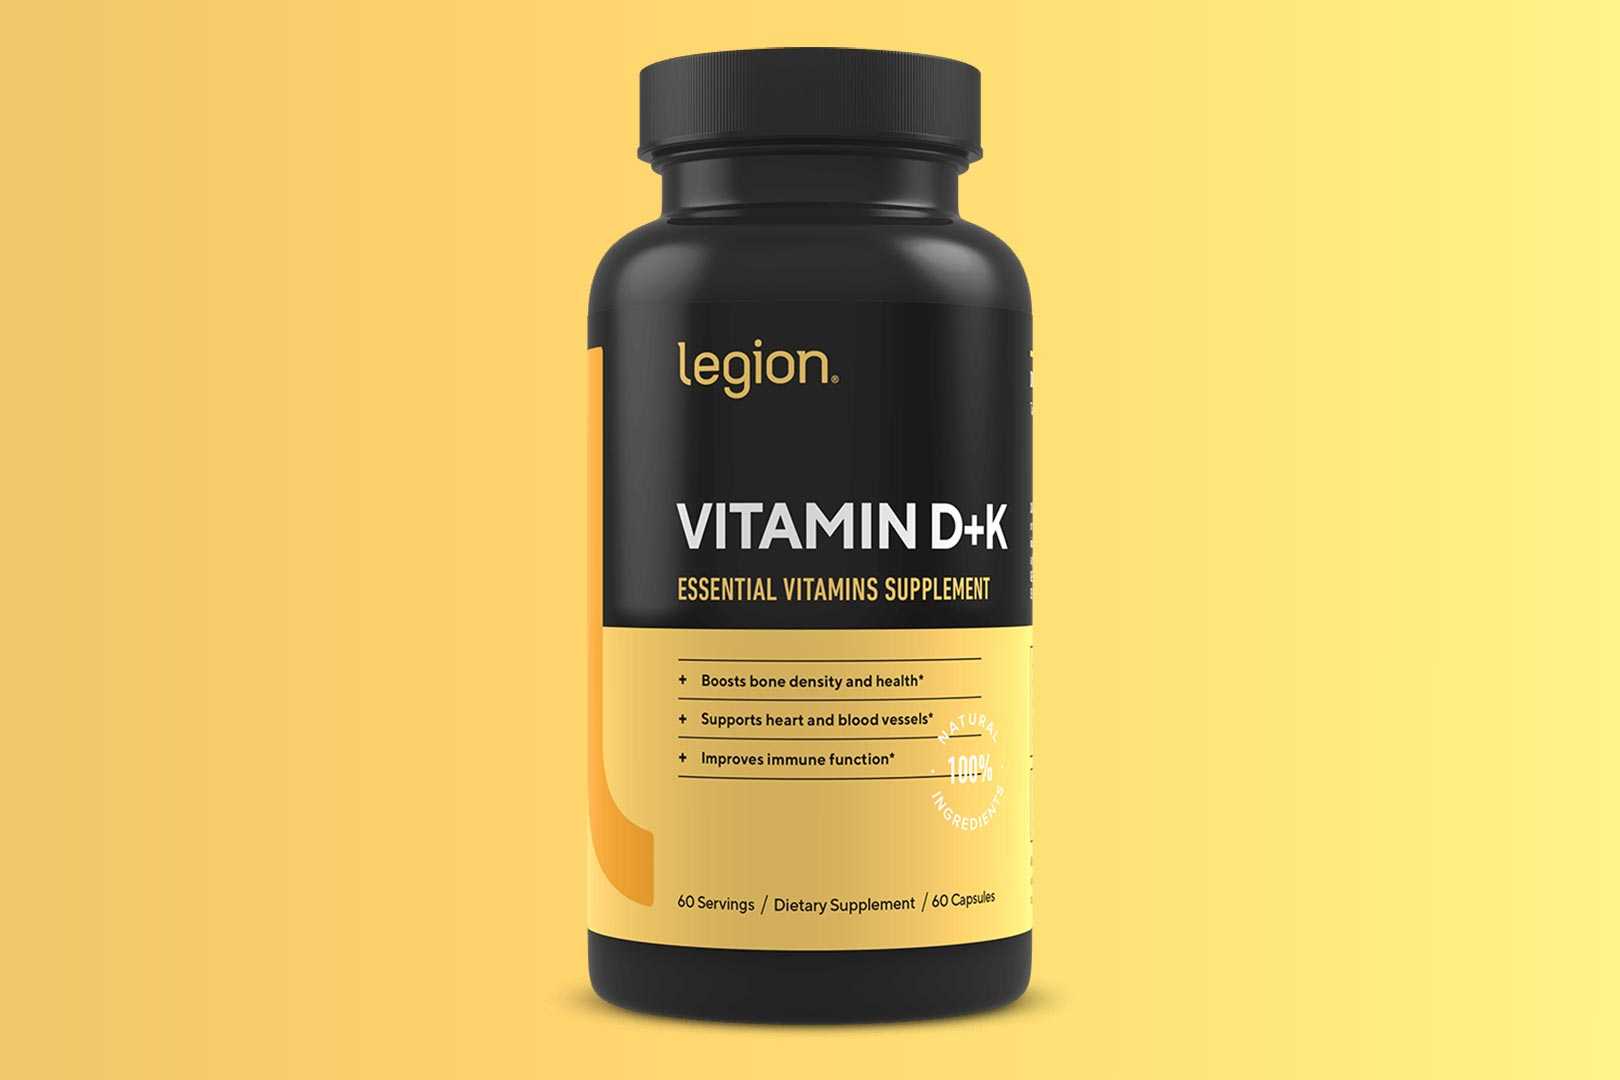 Legion Vitamin Dk